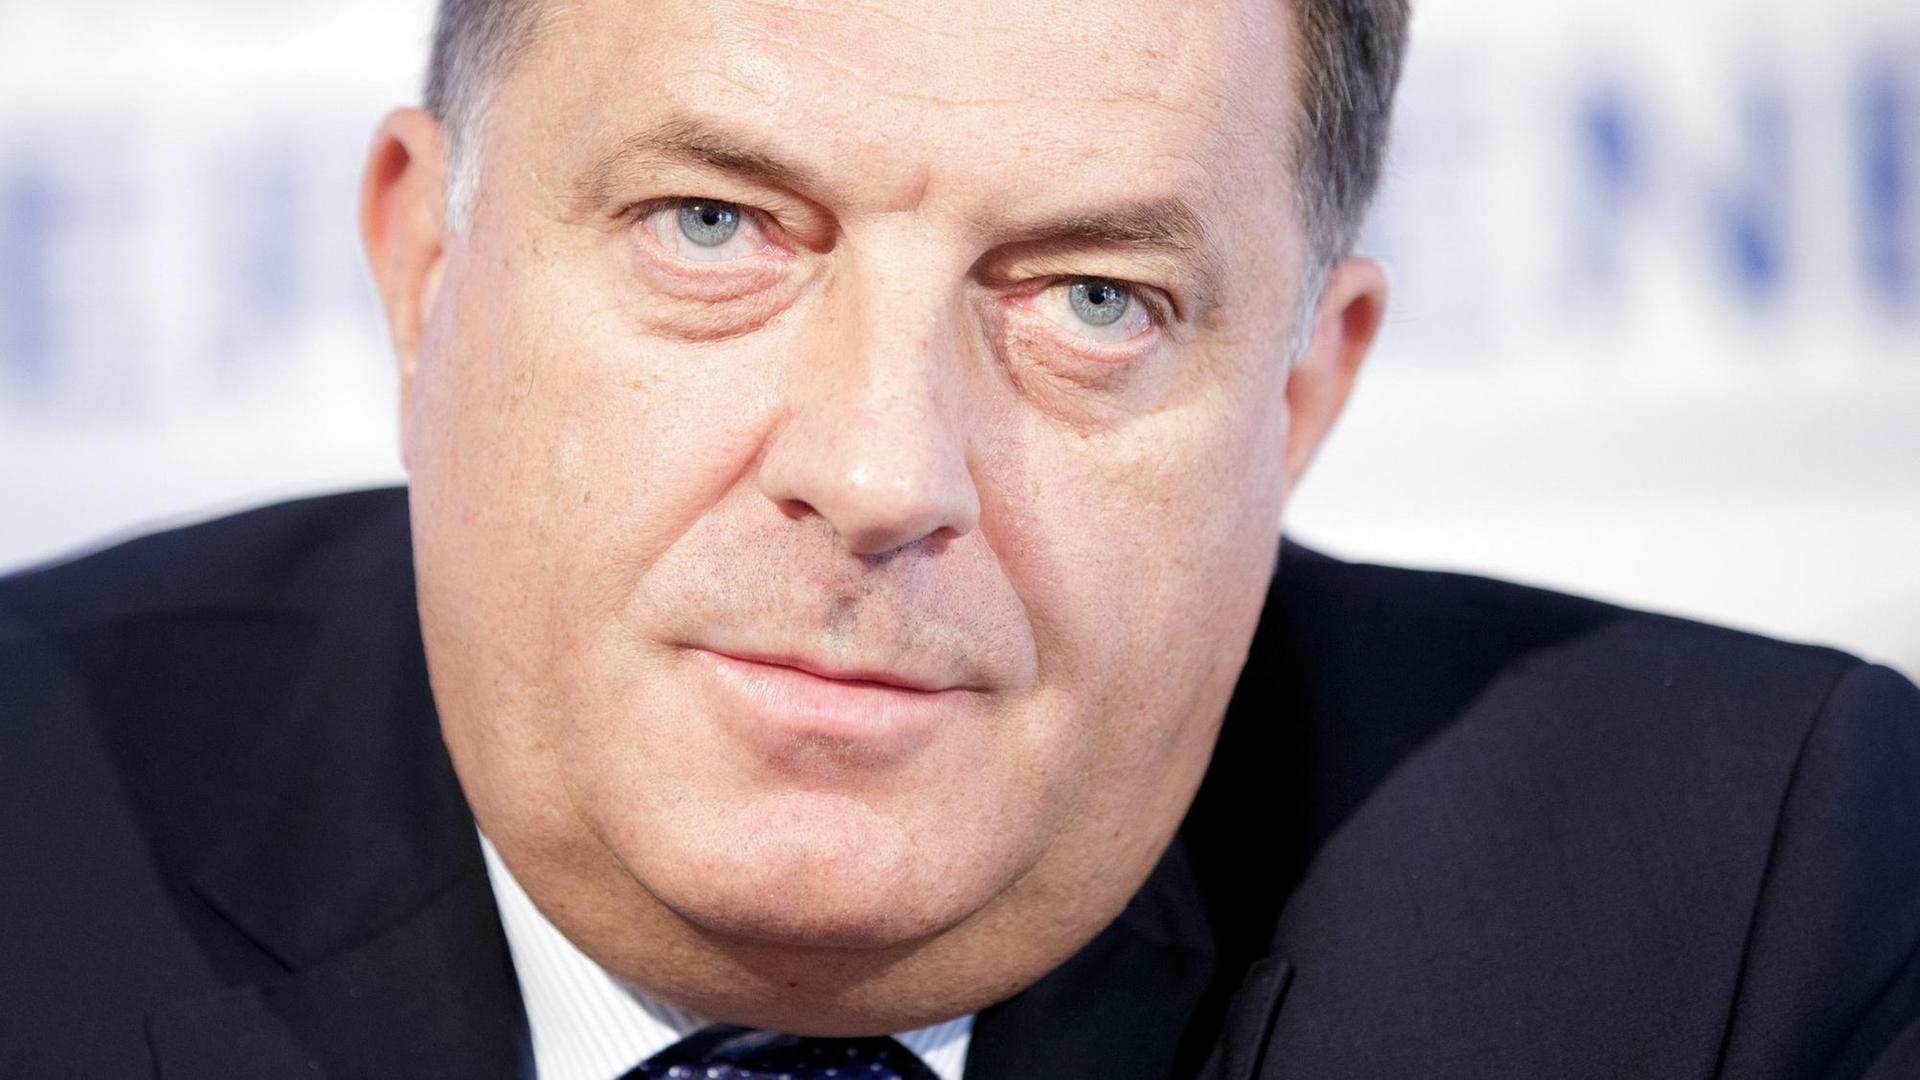 Der Präsident der Republik Srpska, Bosnien-Herzegowina, Milorad Dodik.